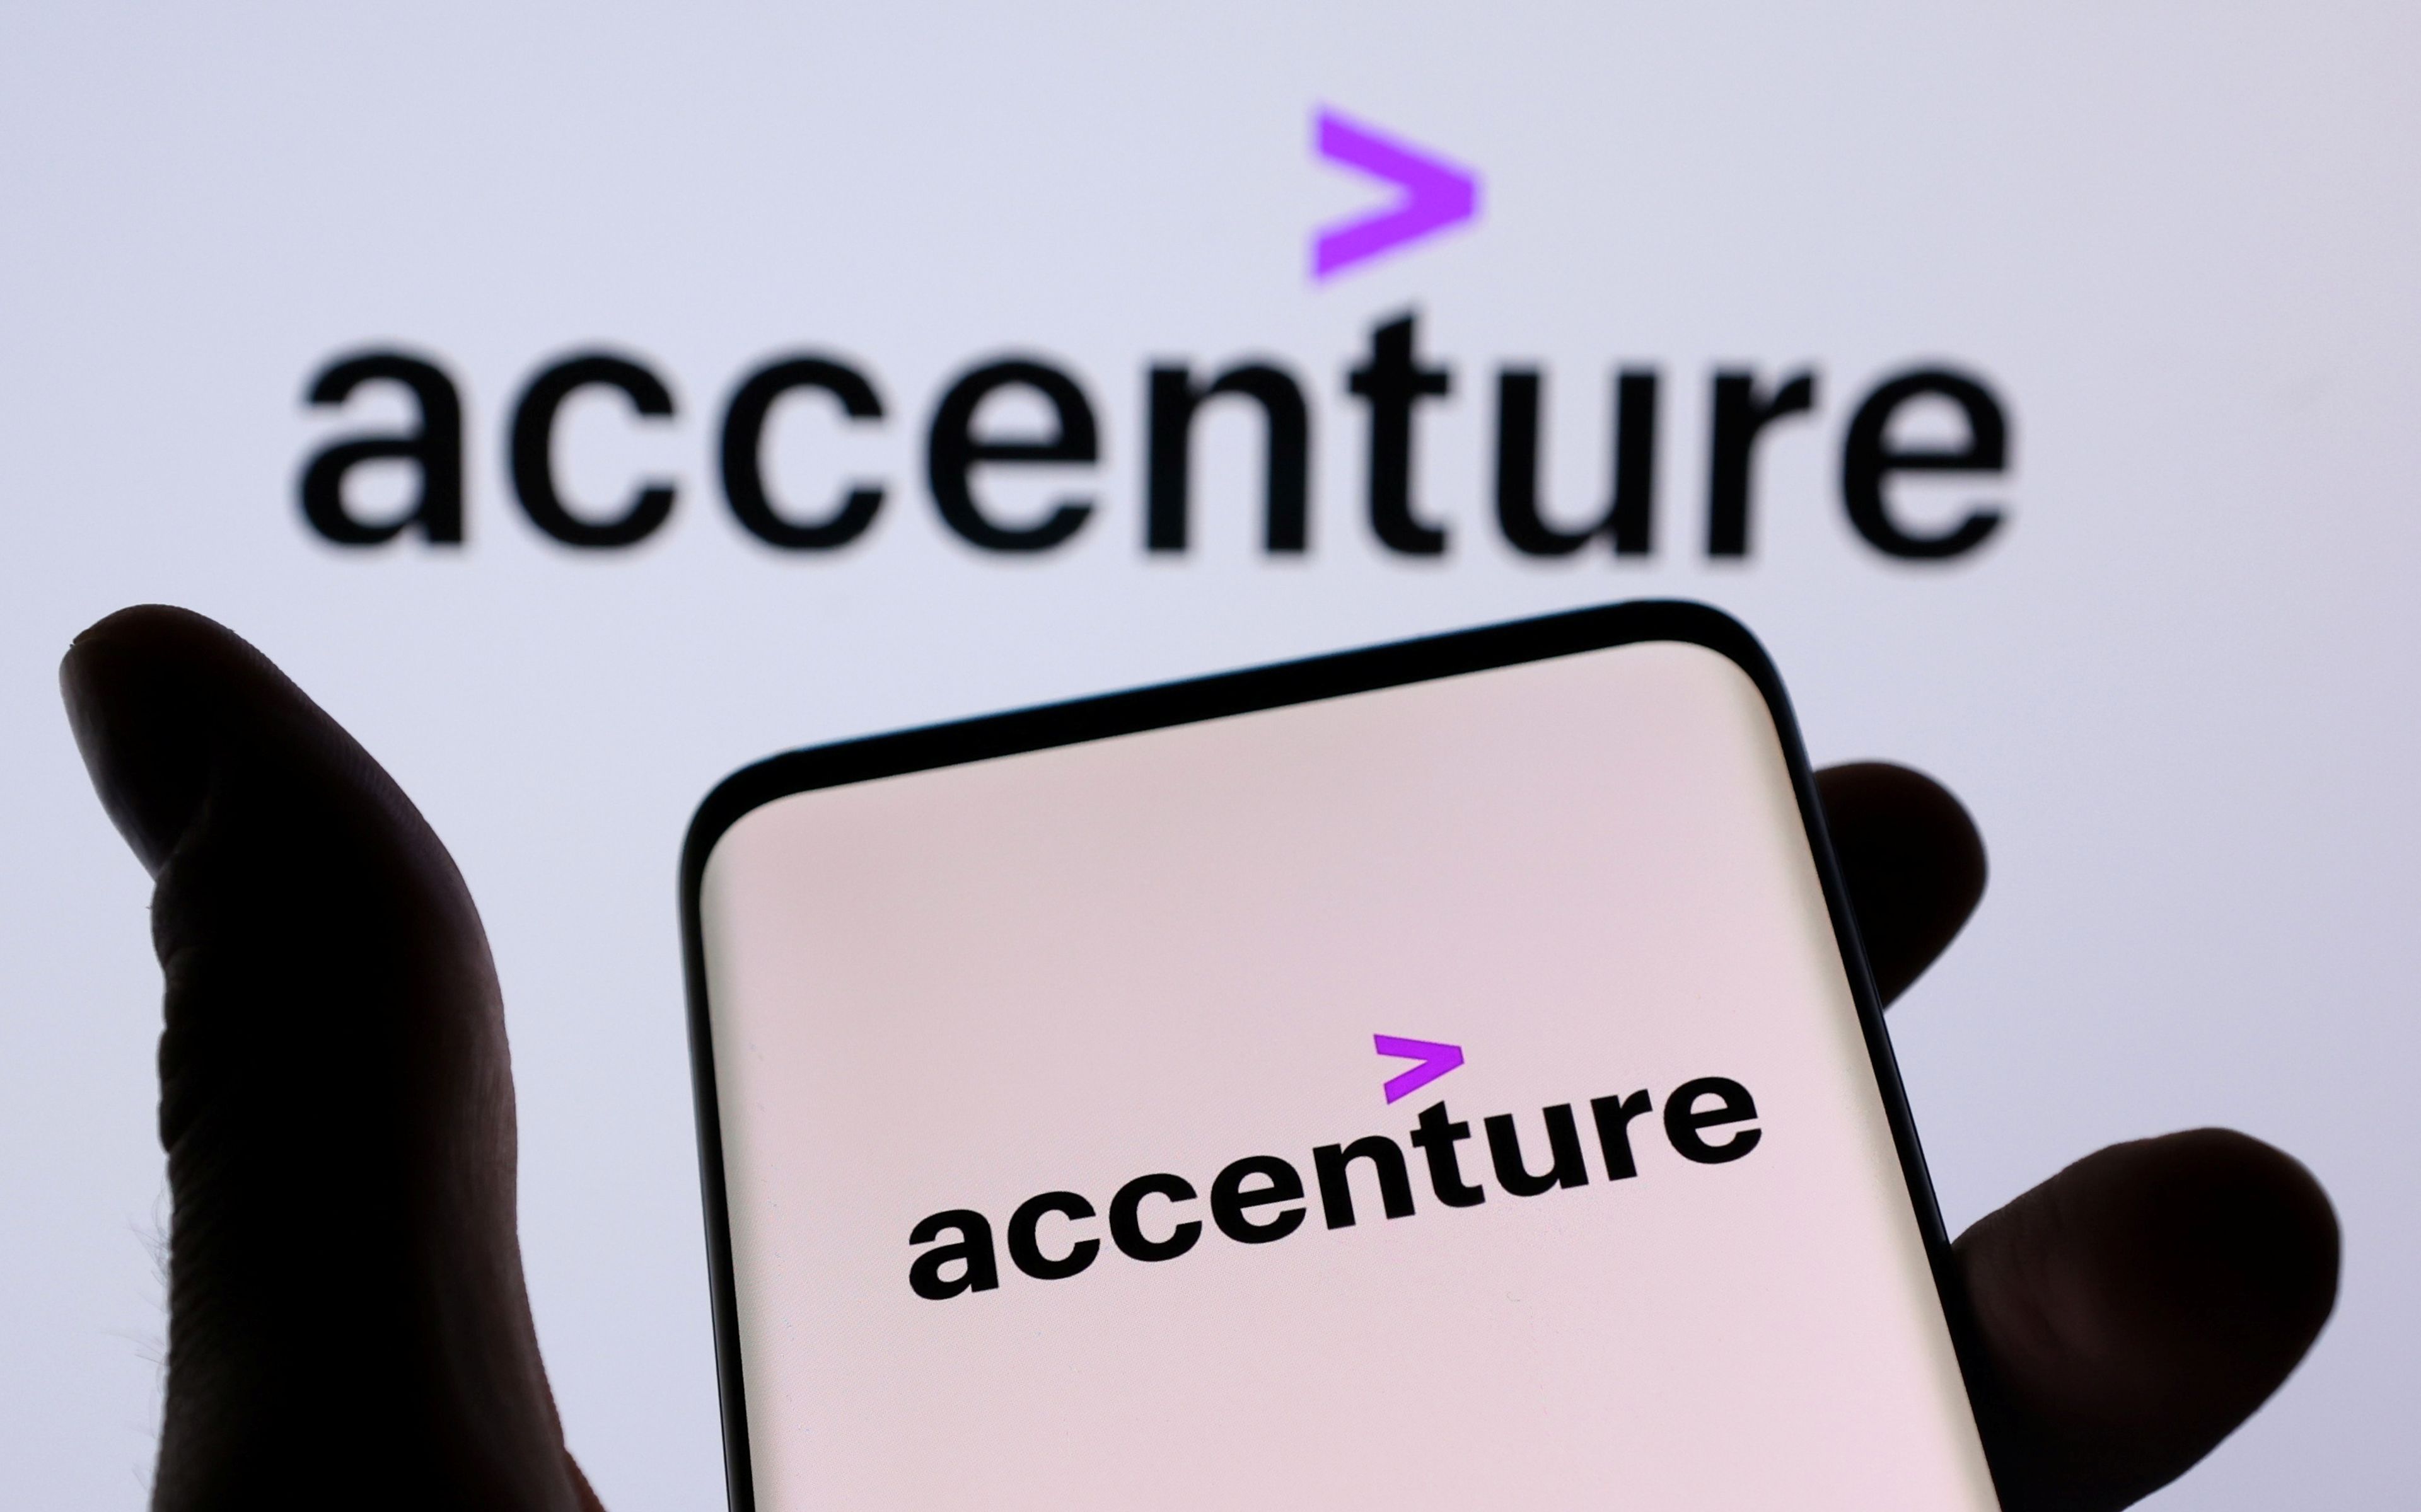 Logo de Accenture.